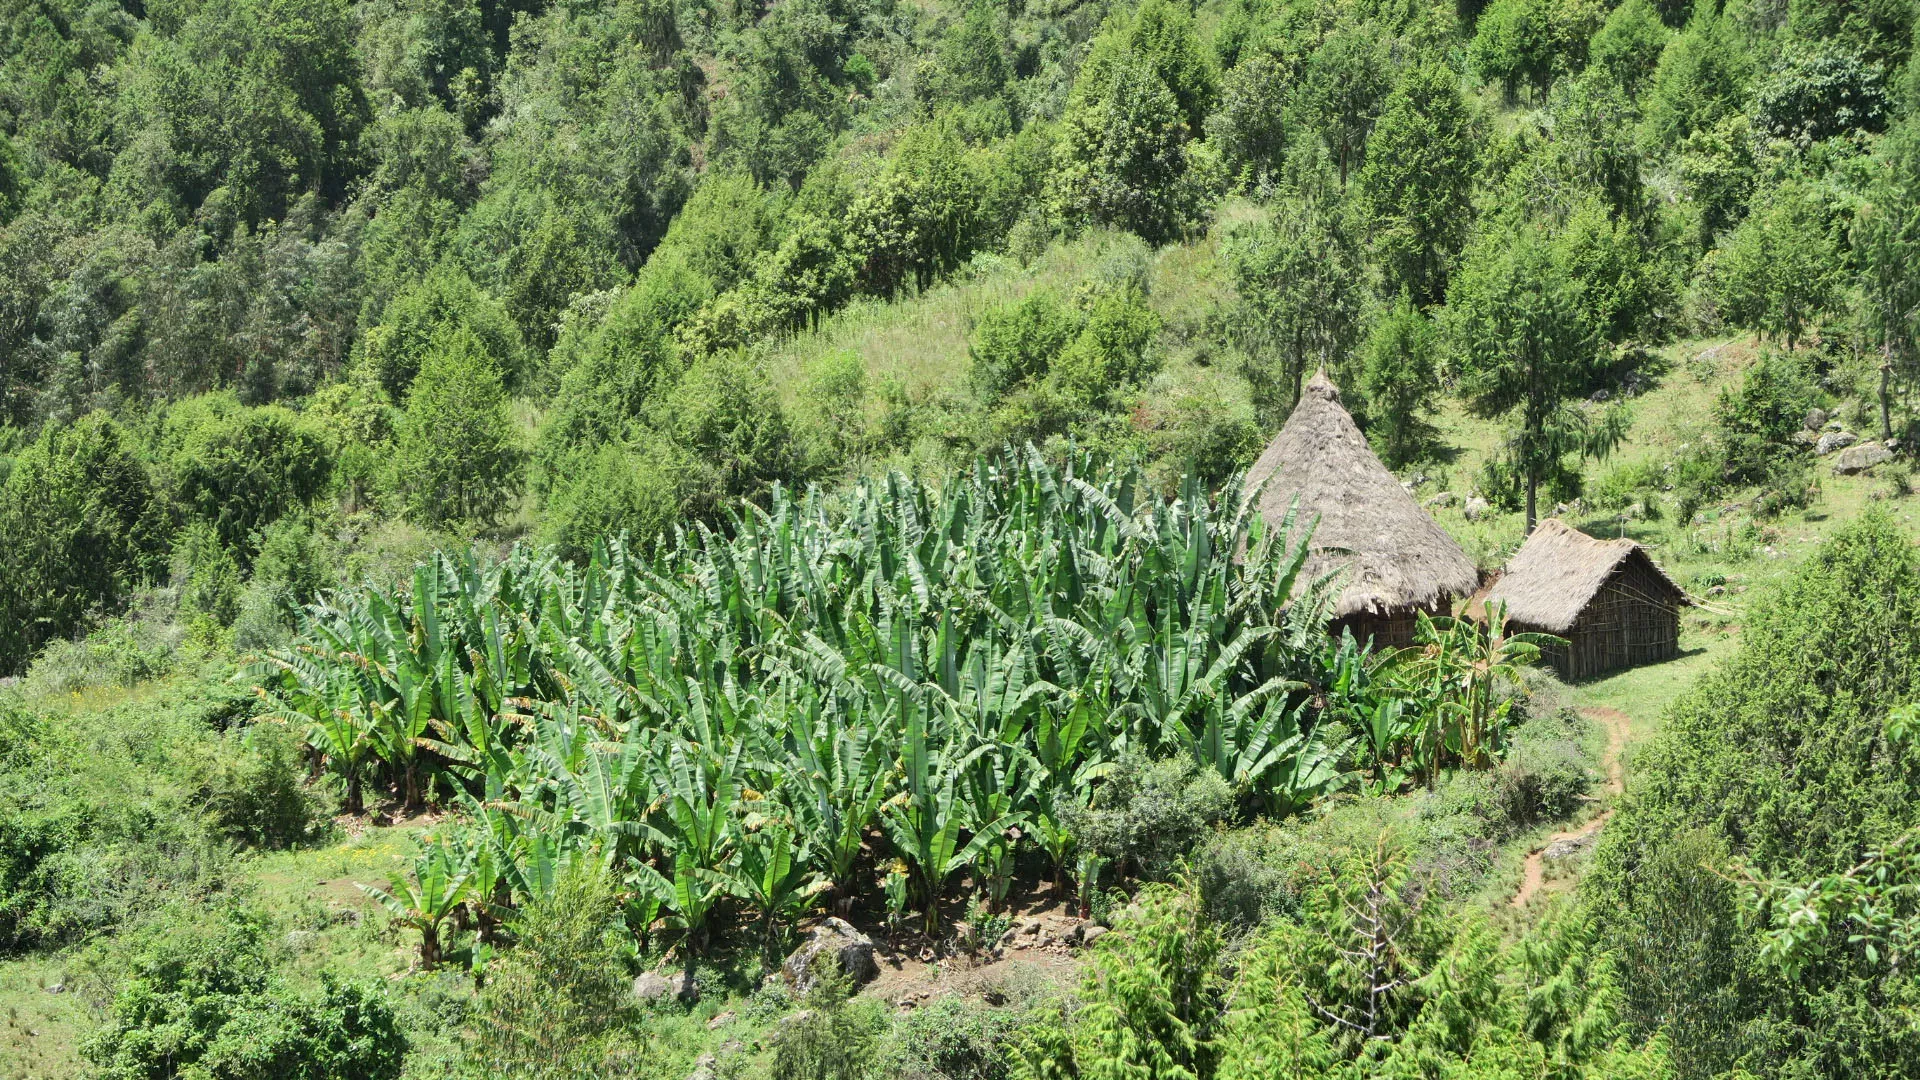 Plants growing in a neat pattern by huts on a hillside.